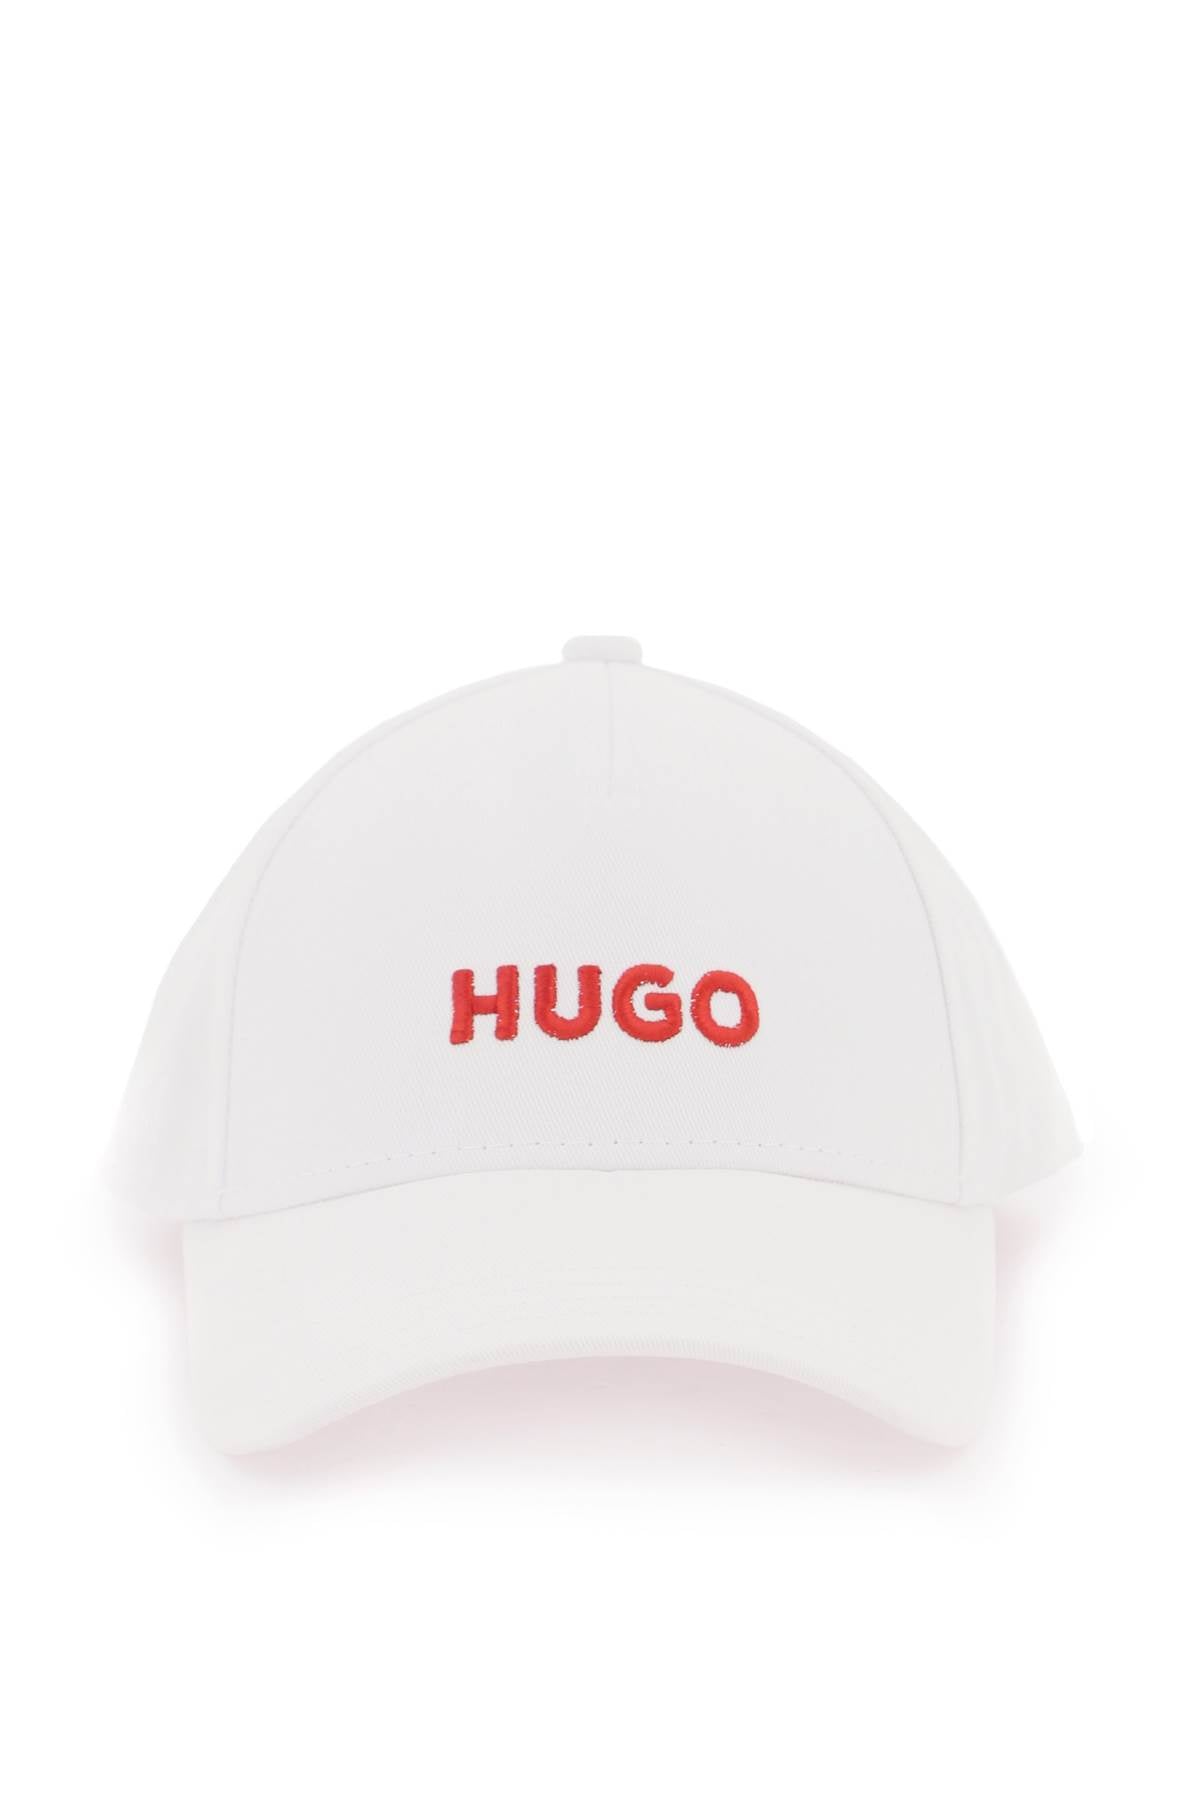 Hugo baseball cap with Station logo embroidered Italy –